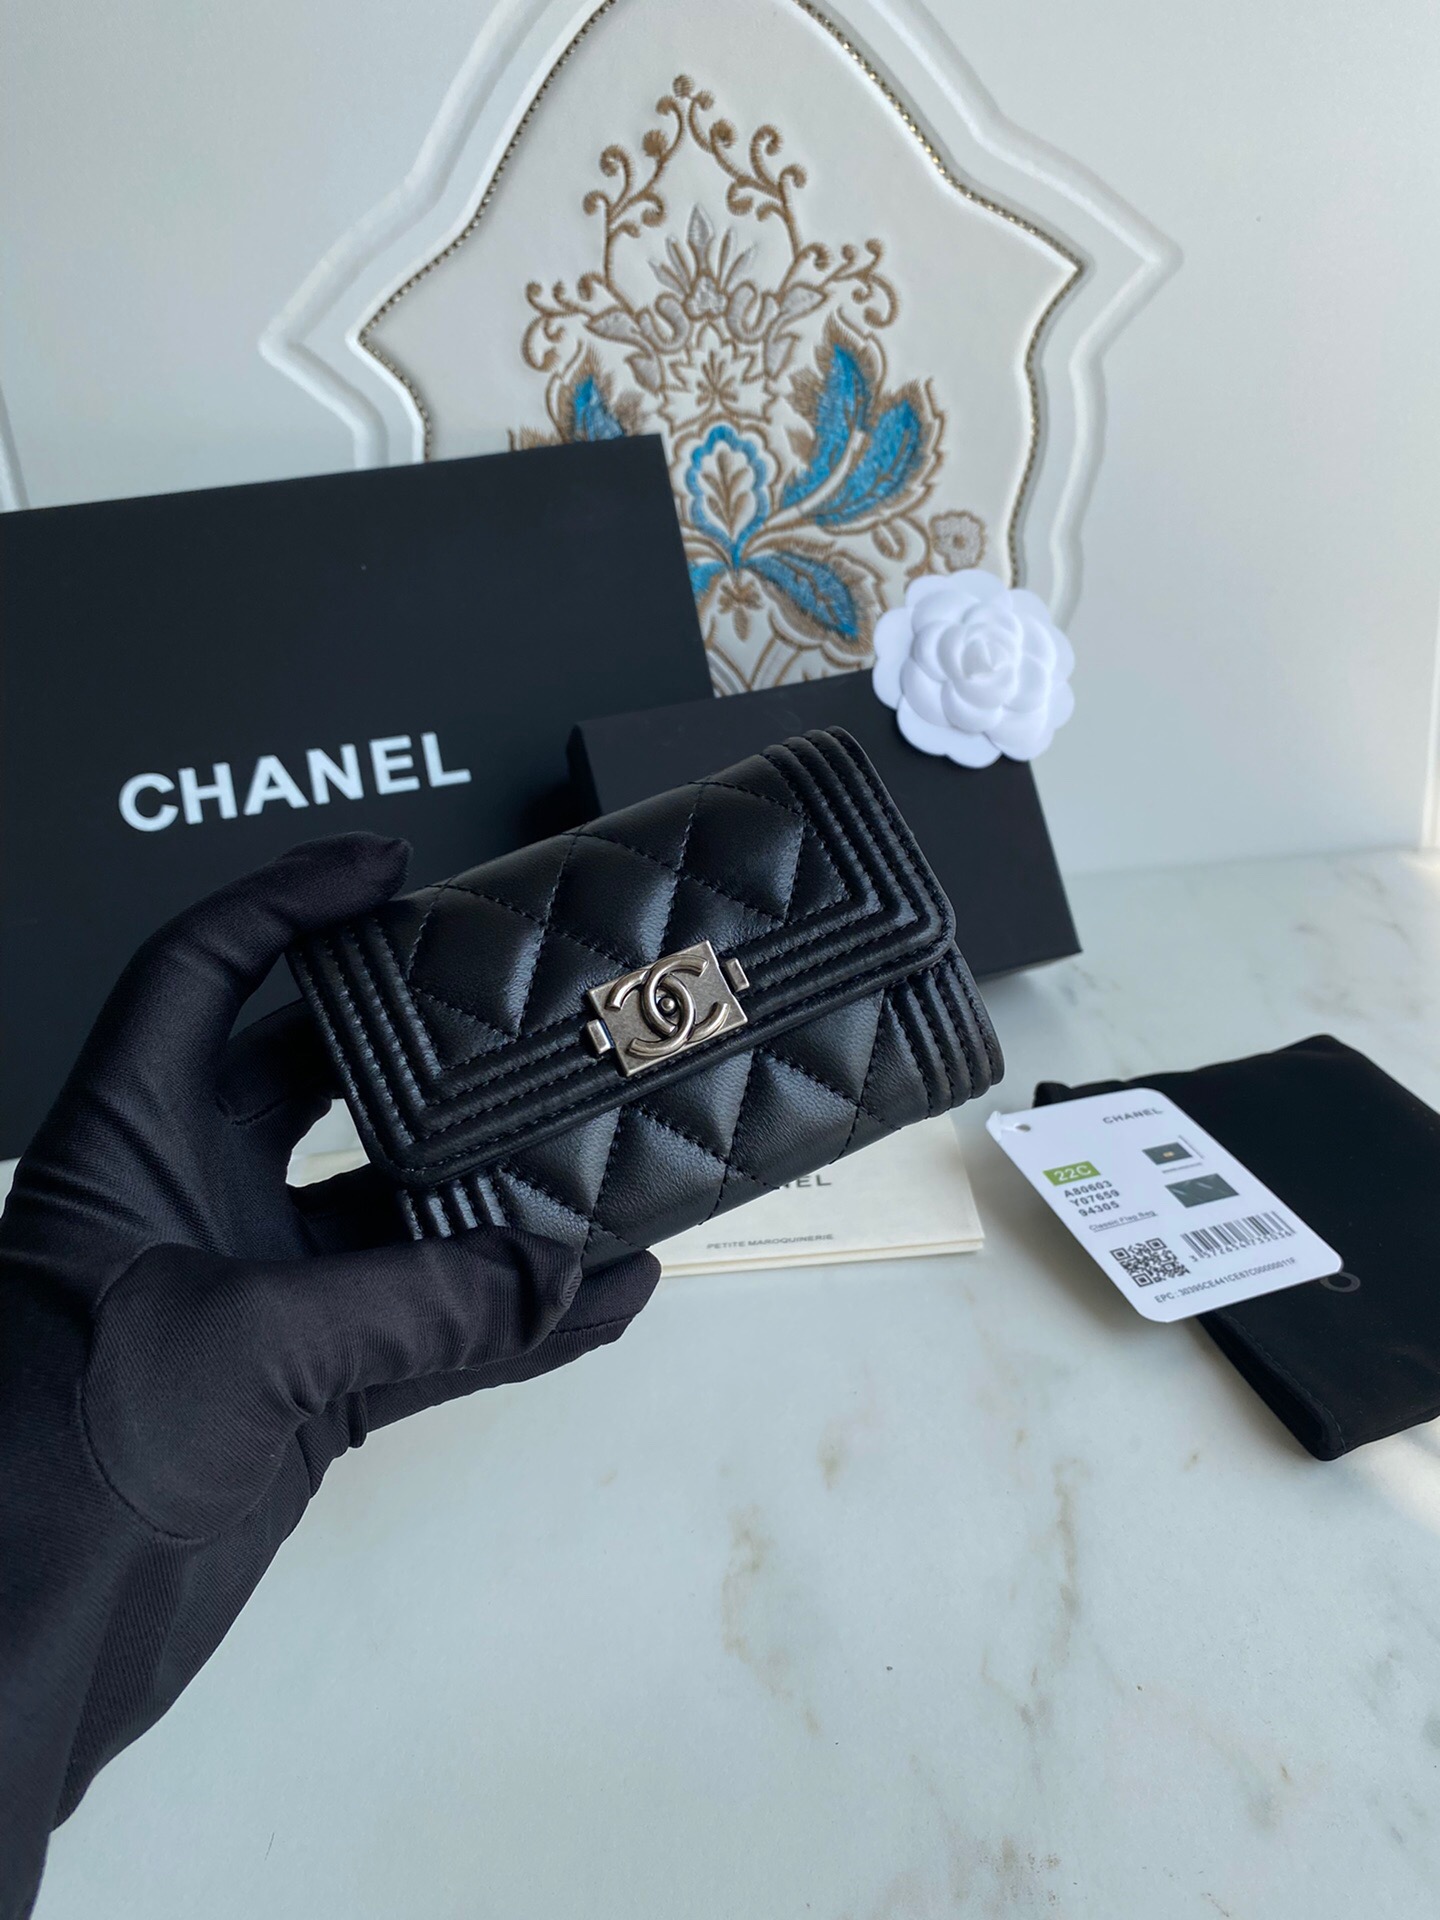 US$ 98.00 - Chanel Leather Wallet - www.gobrandmall.com